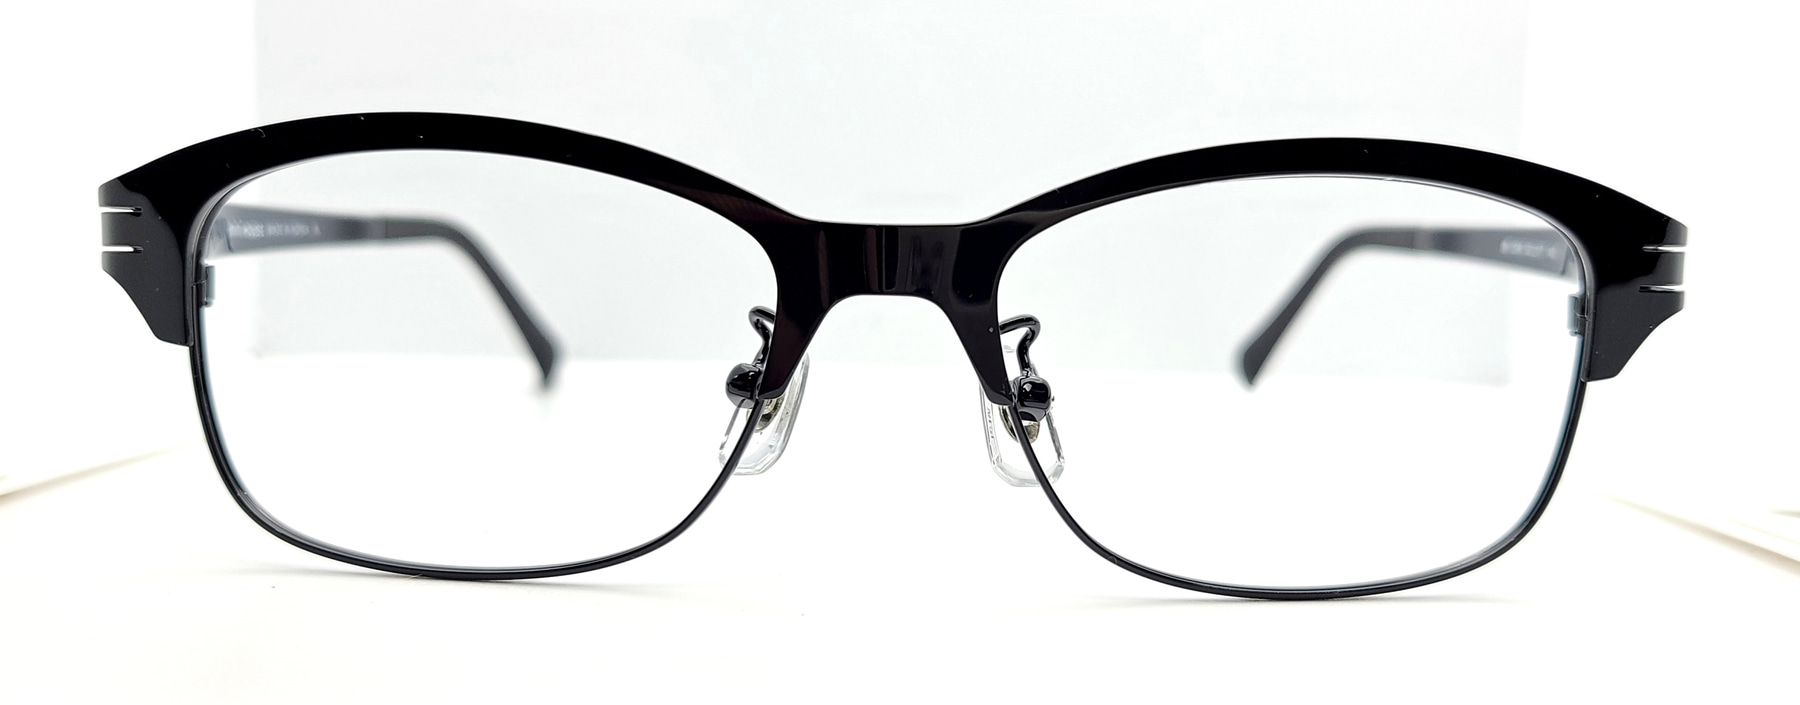 MINIHOUSE M-1256, Korean glasses, sunglasses, eyeglasses, glasses